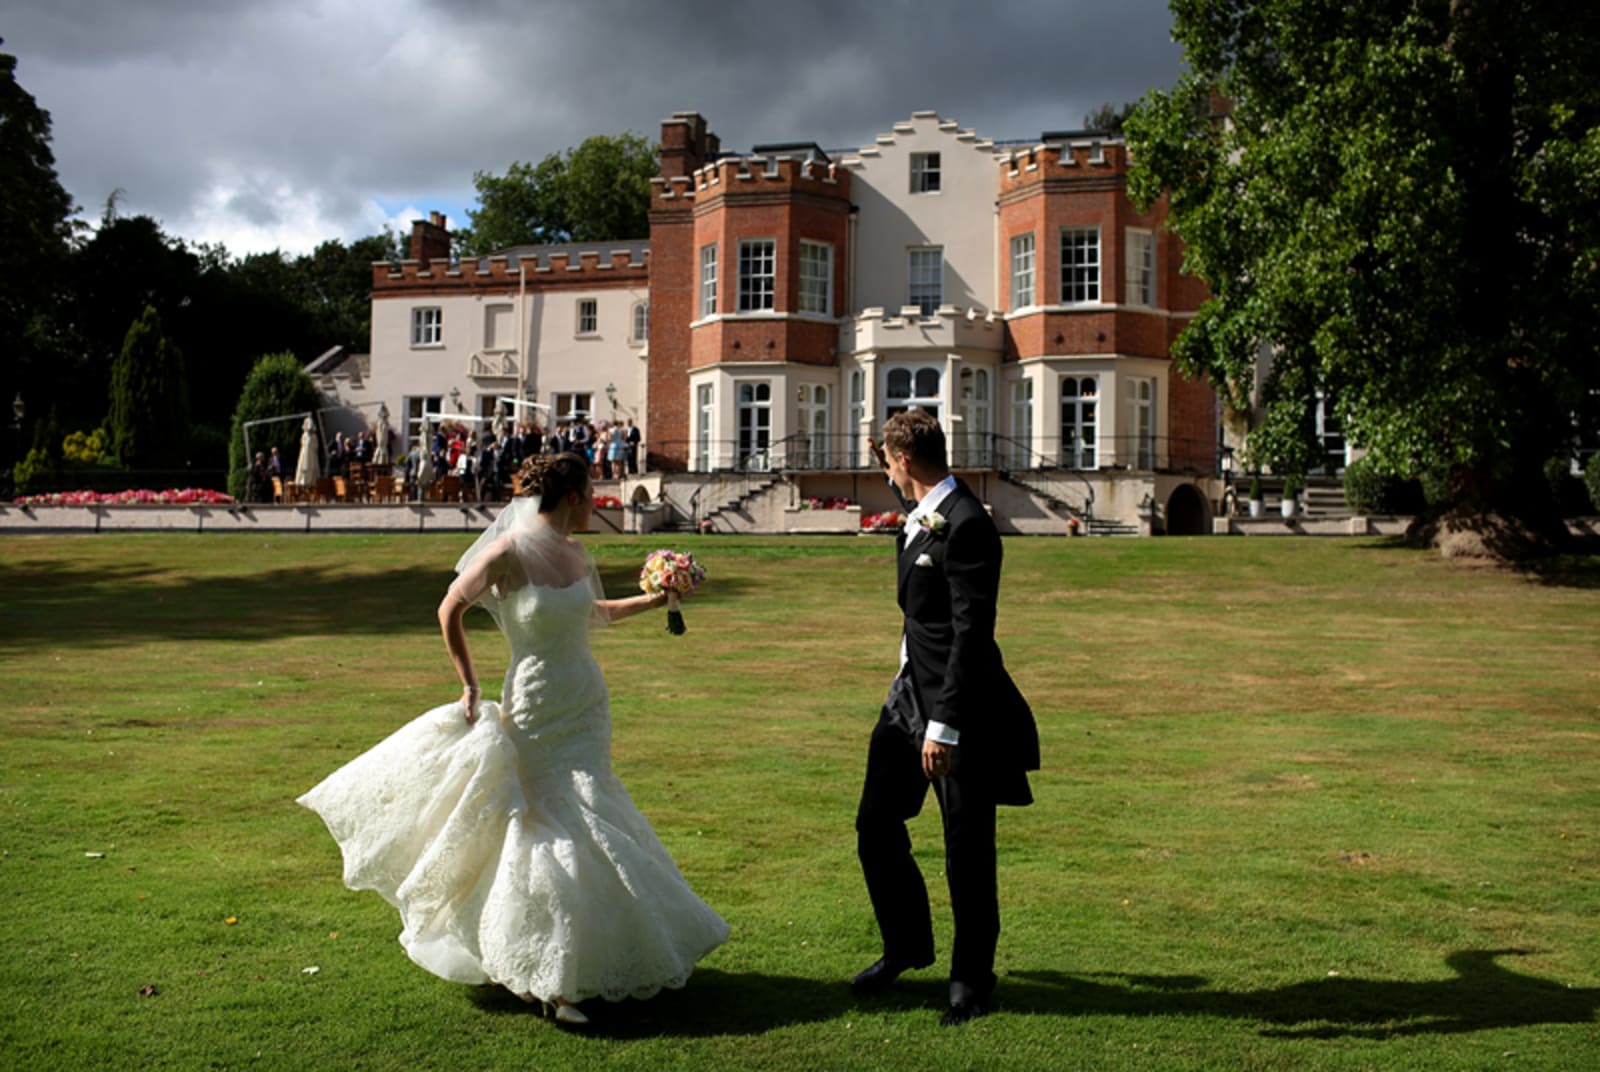 South East | Buckinghamshire | Maidenhead | Summer | Classic | Elegant | Blue | Pastels | Country House | Real Wedding | Guy Hearn Photography #Bridebook #RealWedding #WeddingIdeas Bridebook.co.uk 